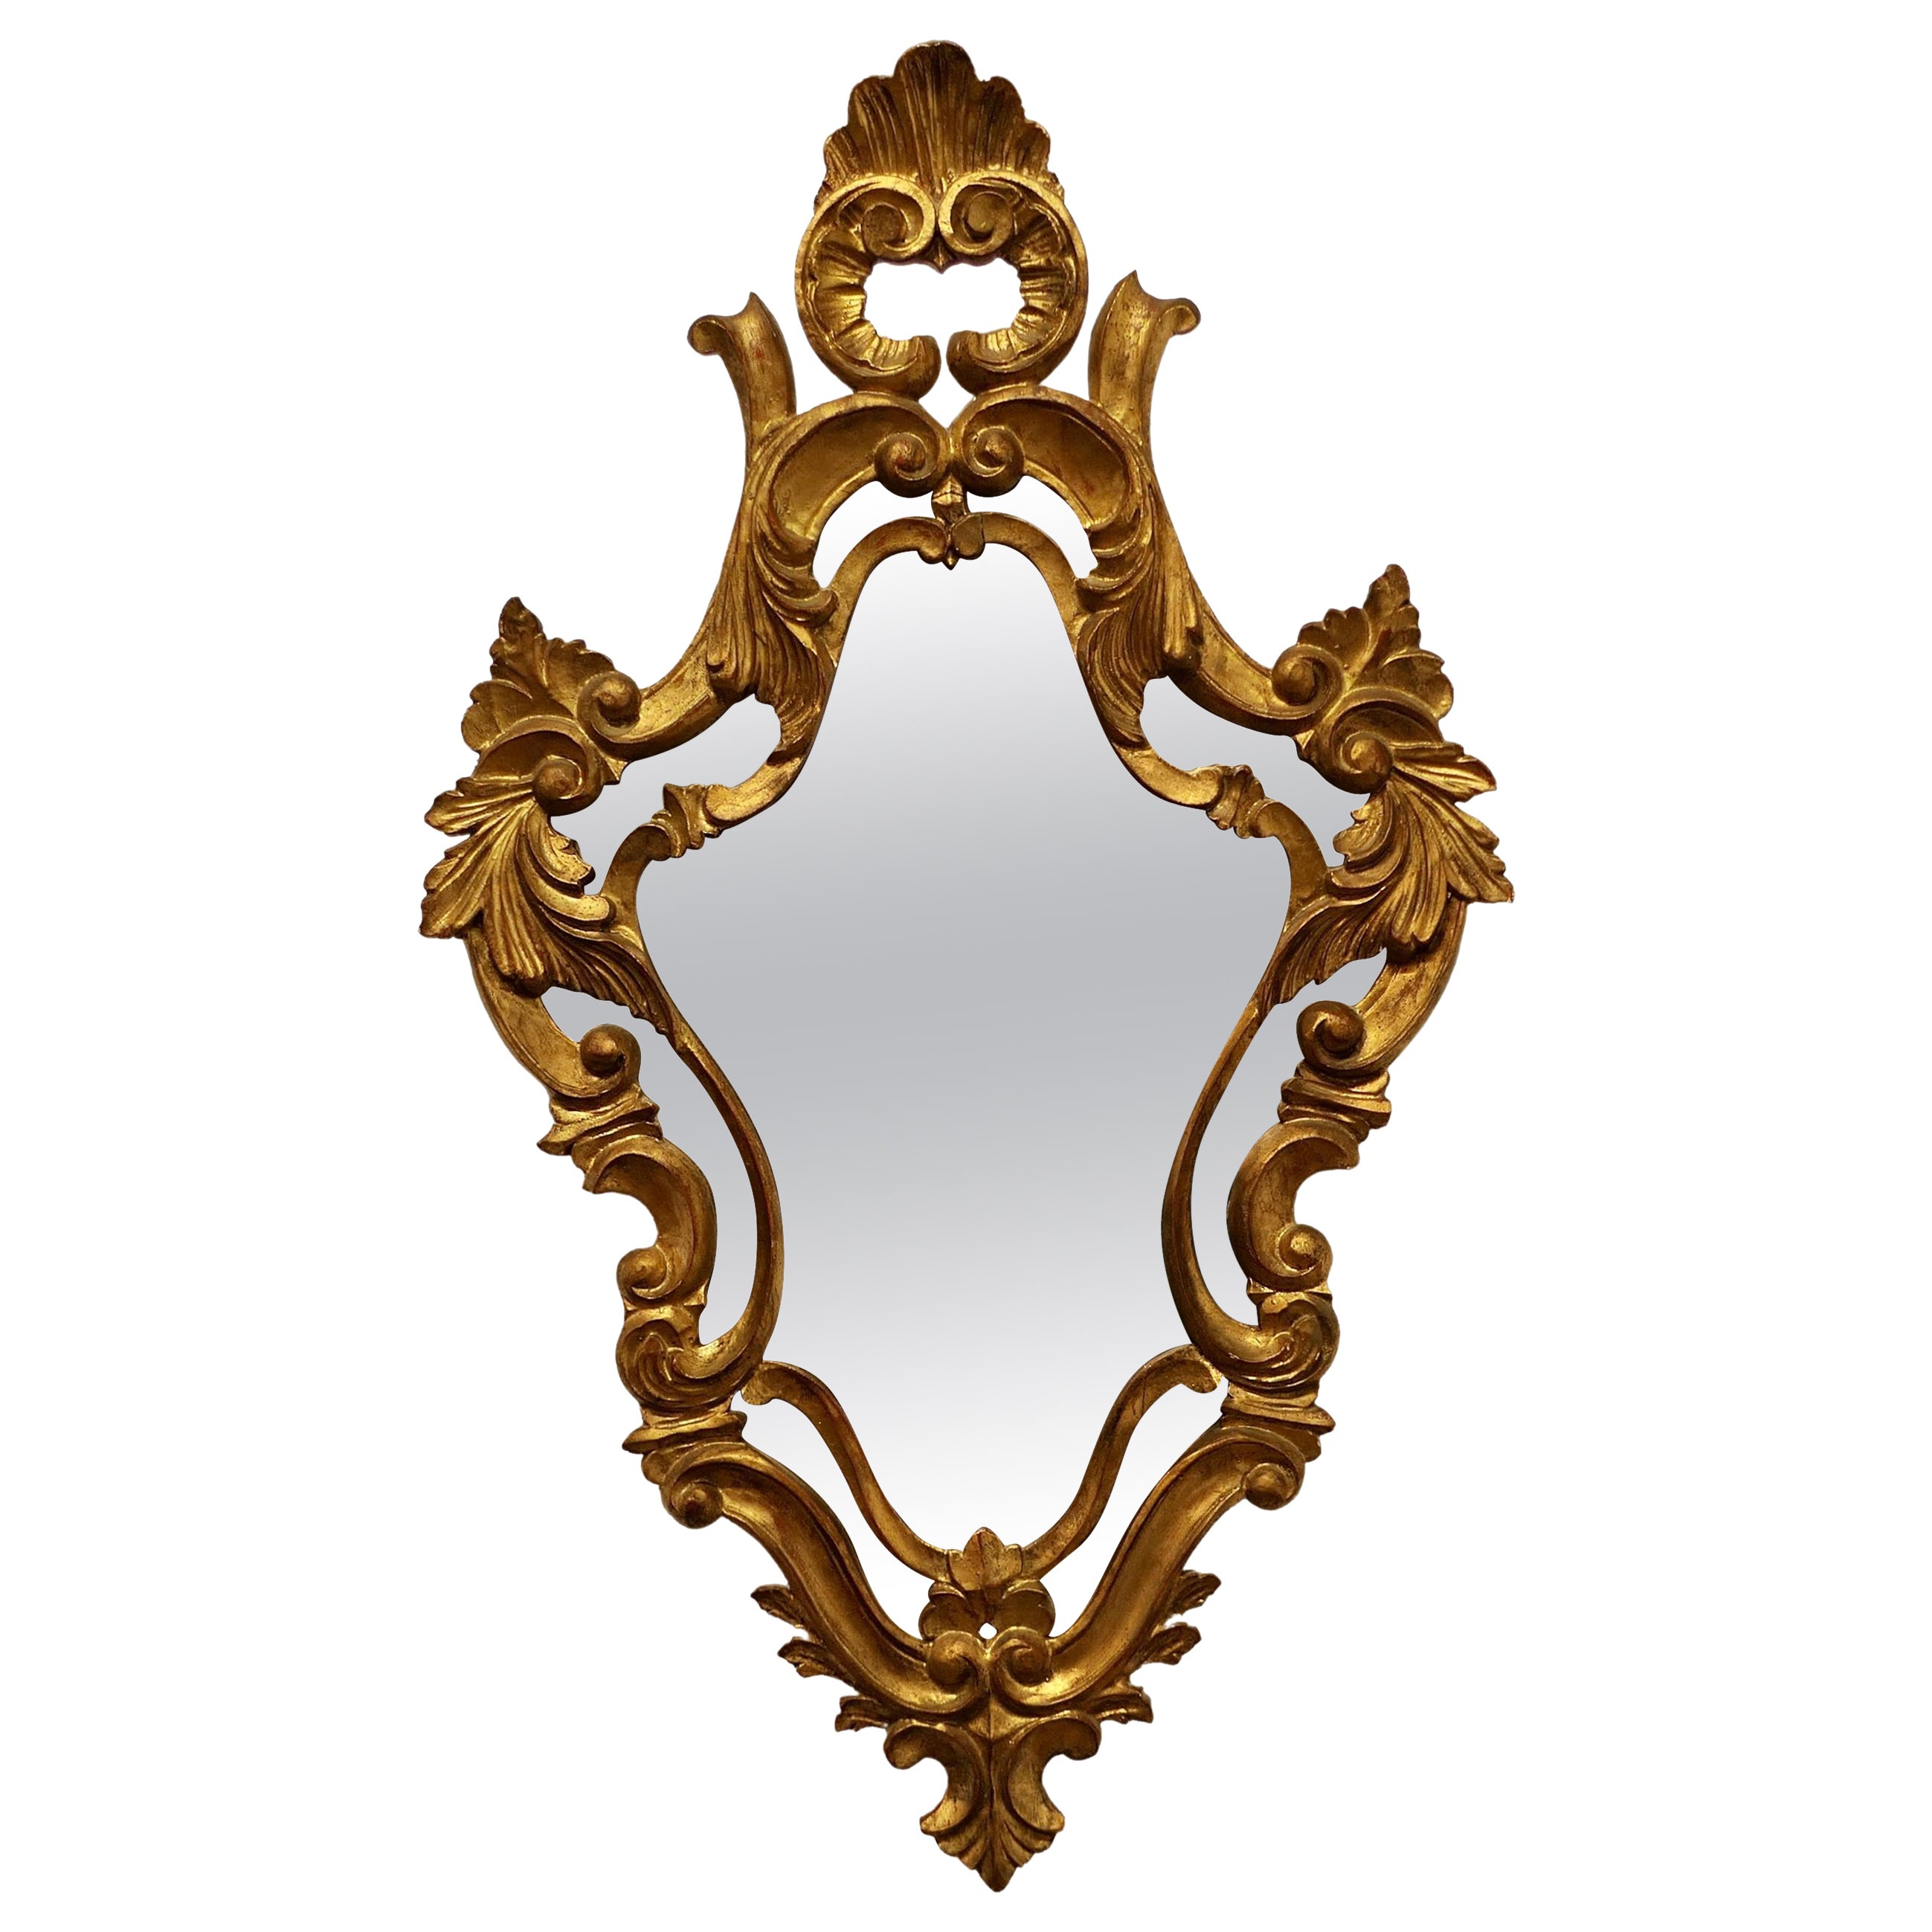 Superb Rococo Style Gilt Wall Mirror the Mirror Has an Elaborate Frame